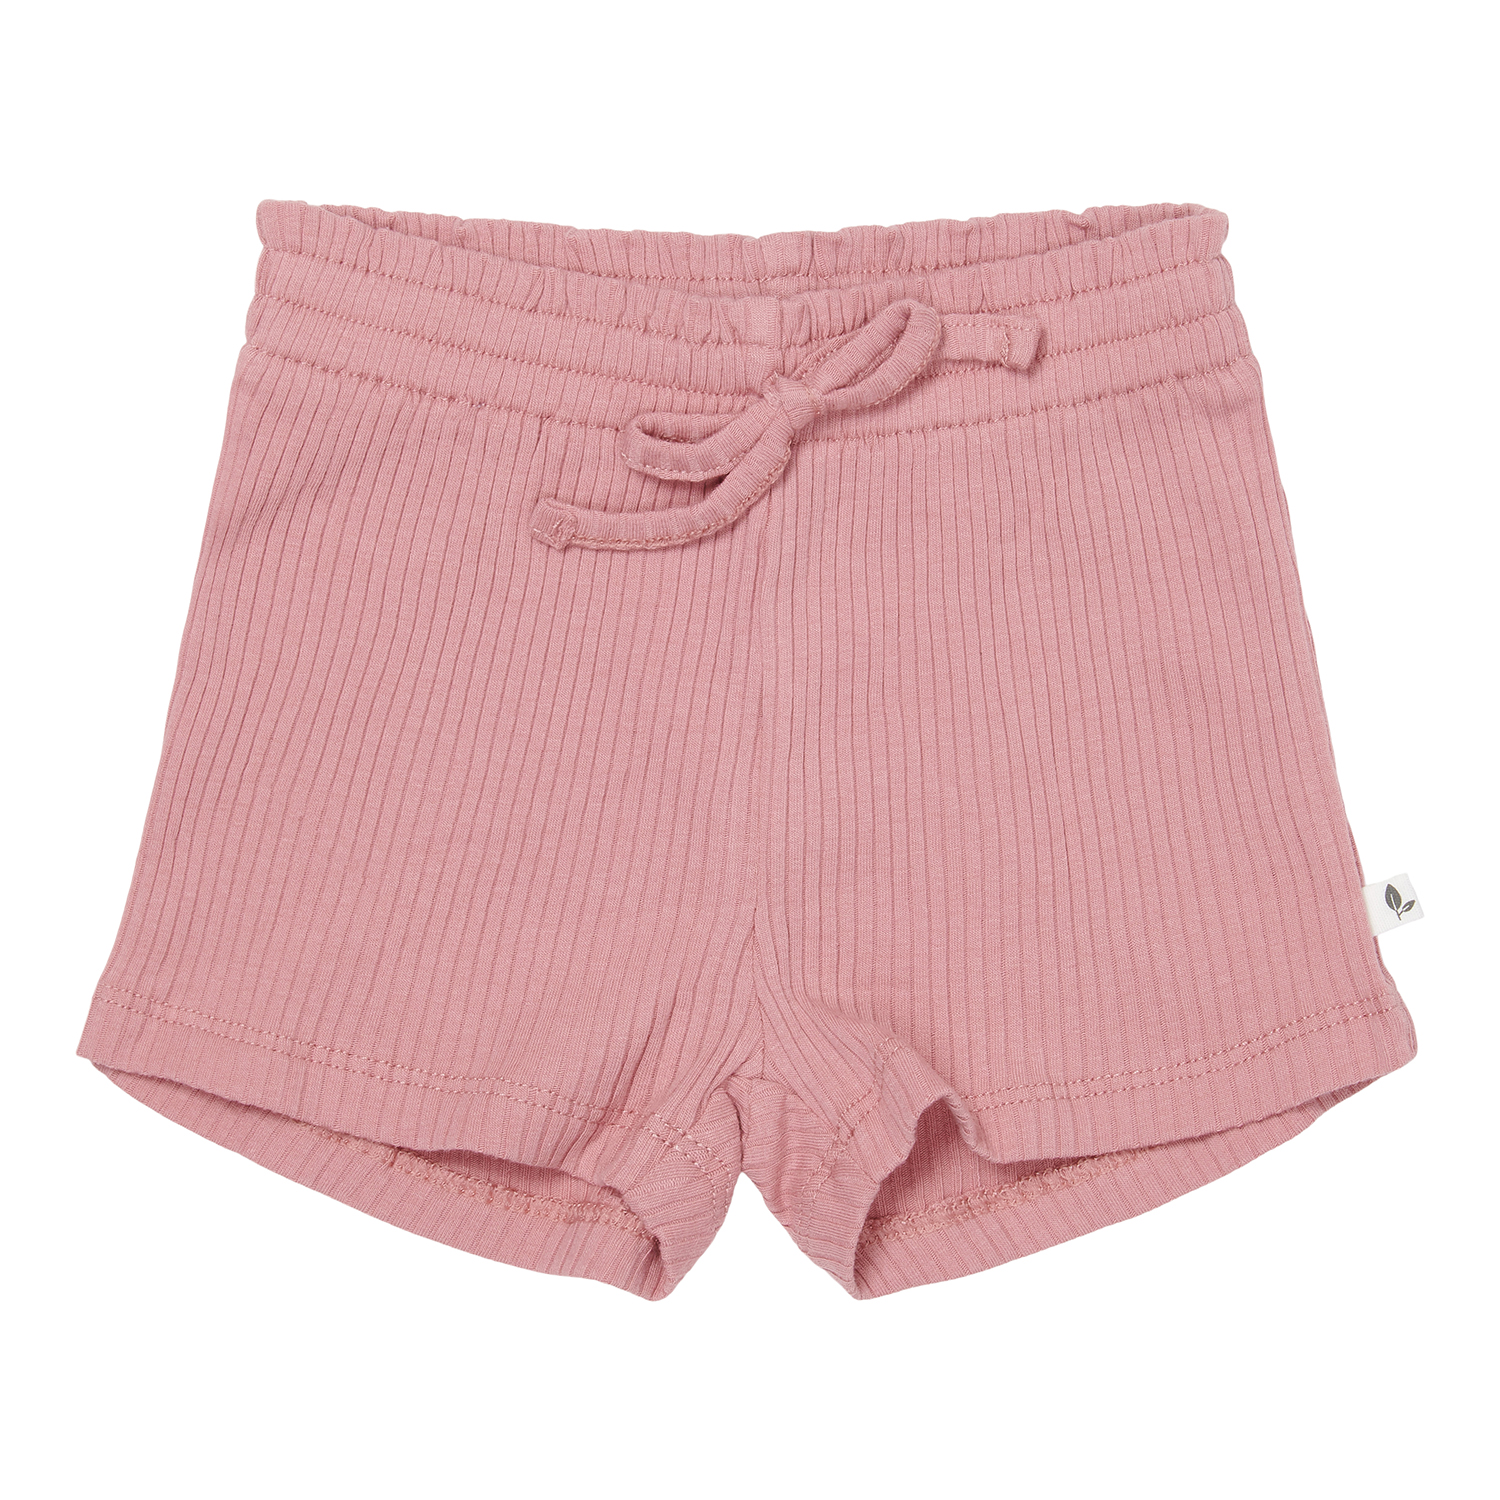 Kurze Hose / Shorts Rippe vintage pink (Gr. 86)